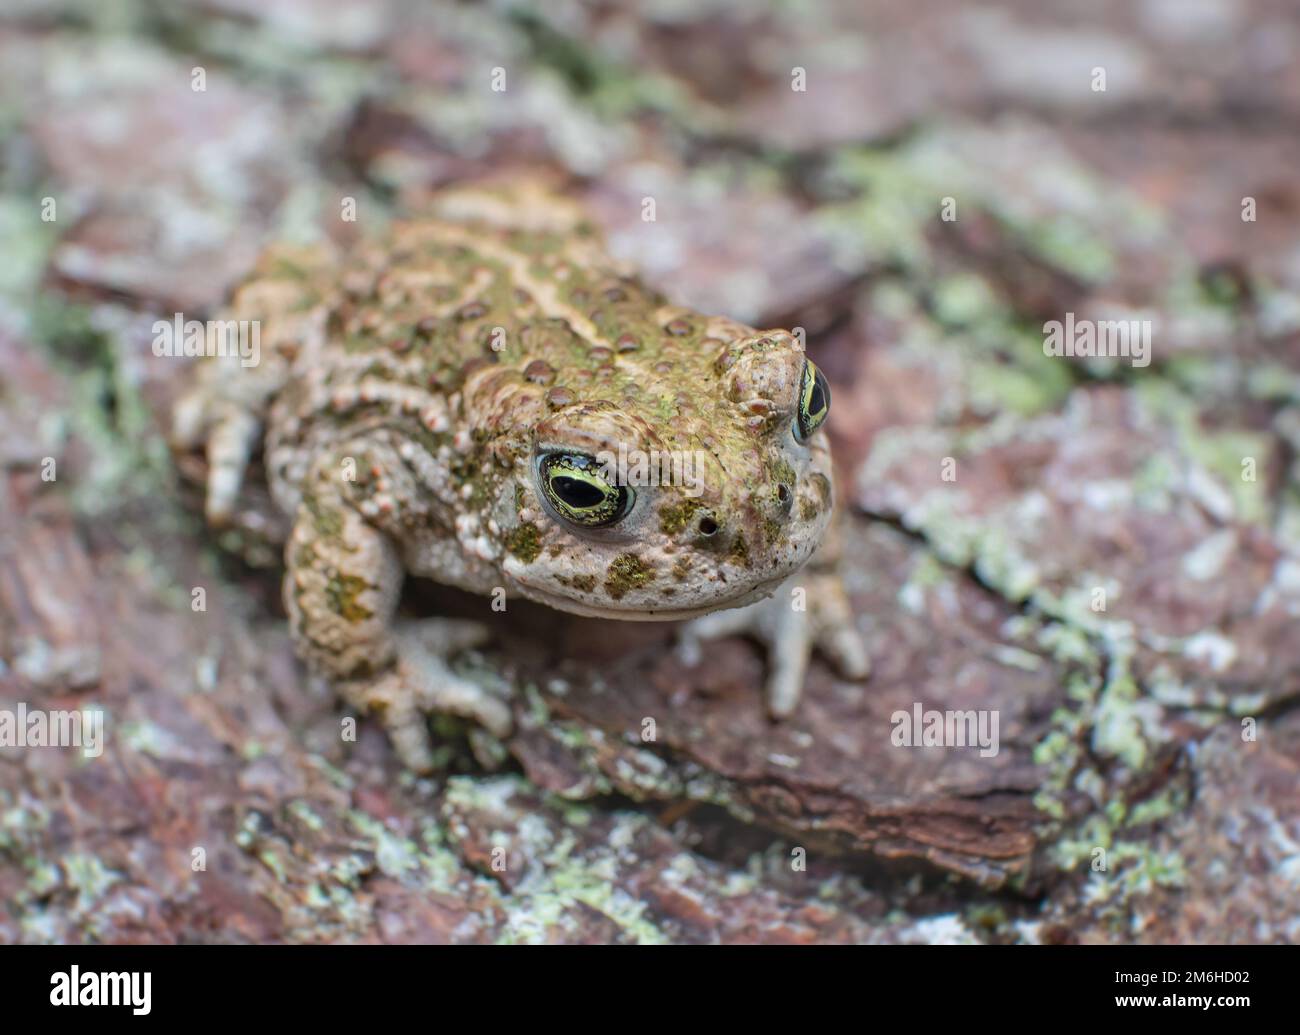 Natterjack toad 'Epidalea calamita' juvenile Stock Photo